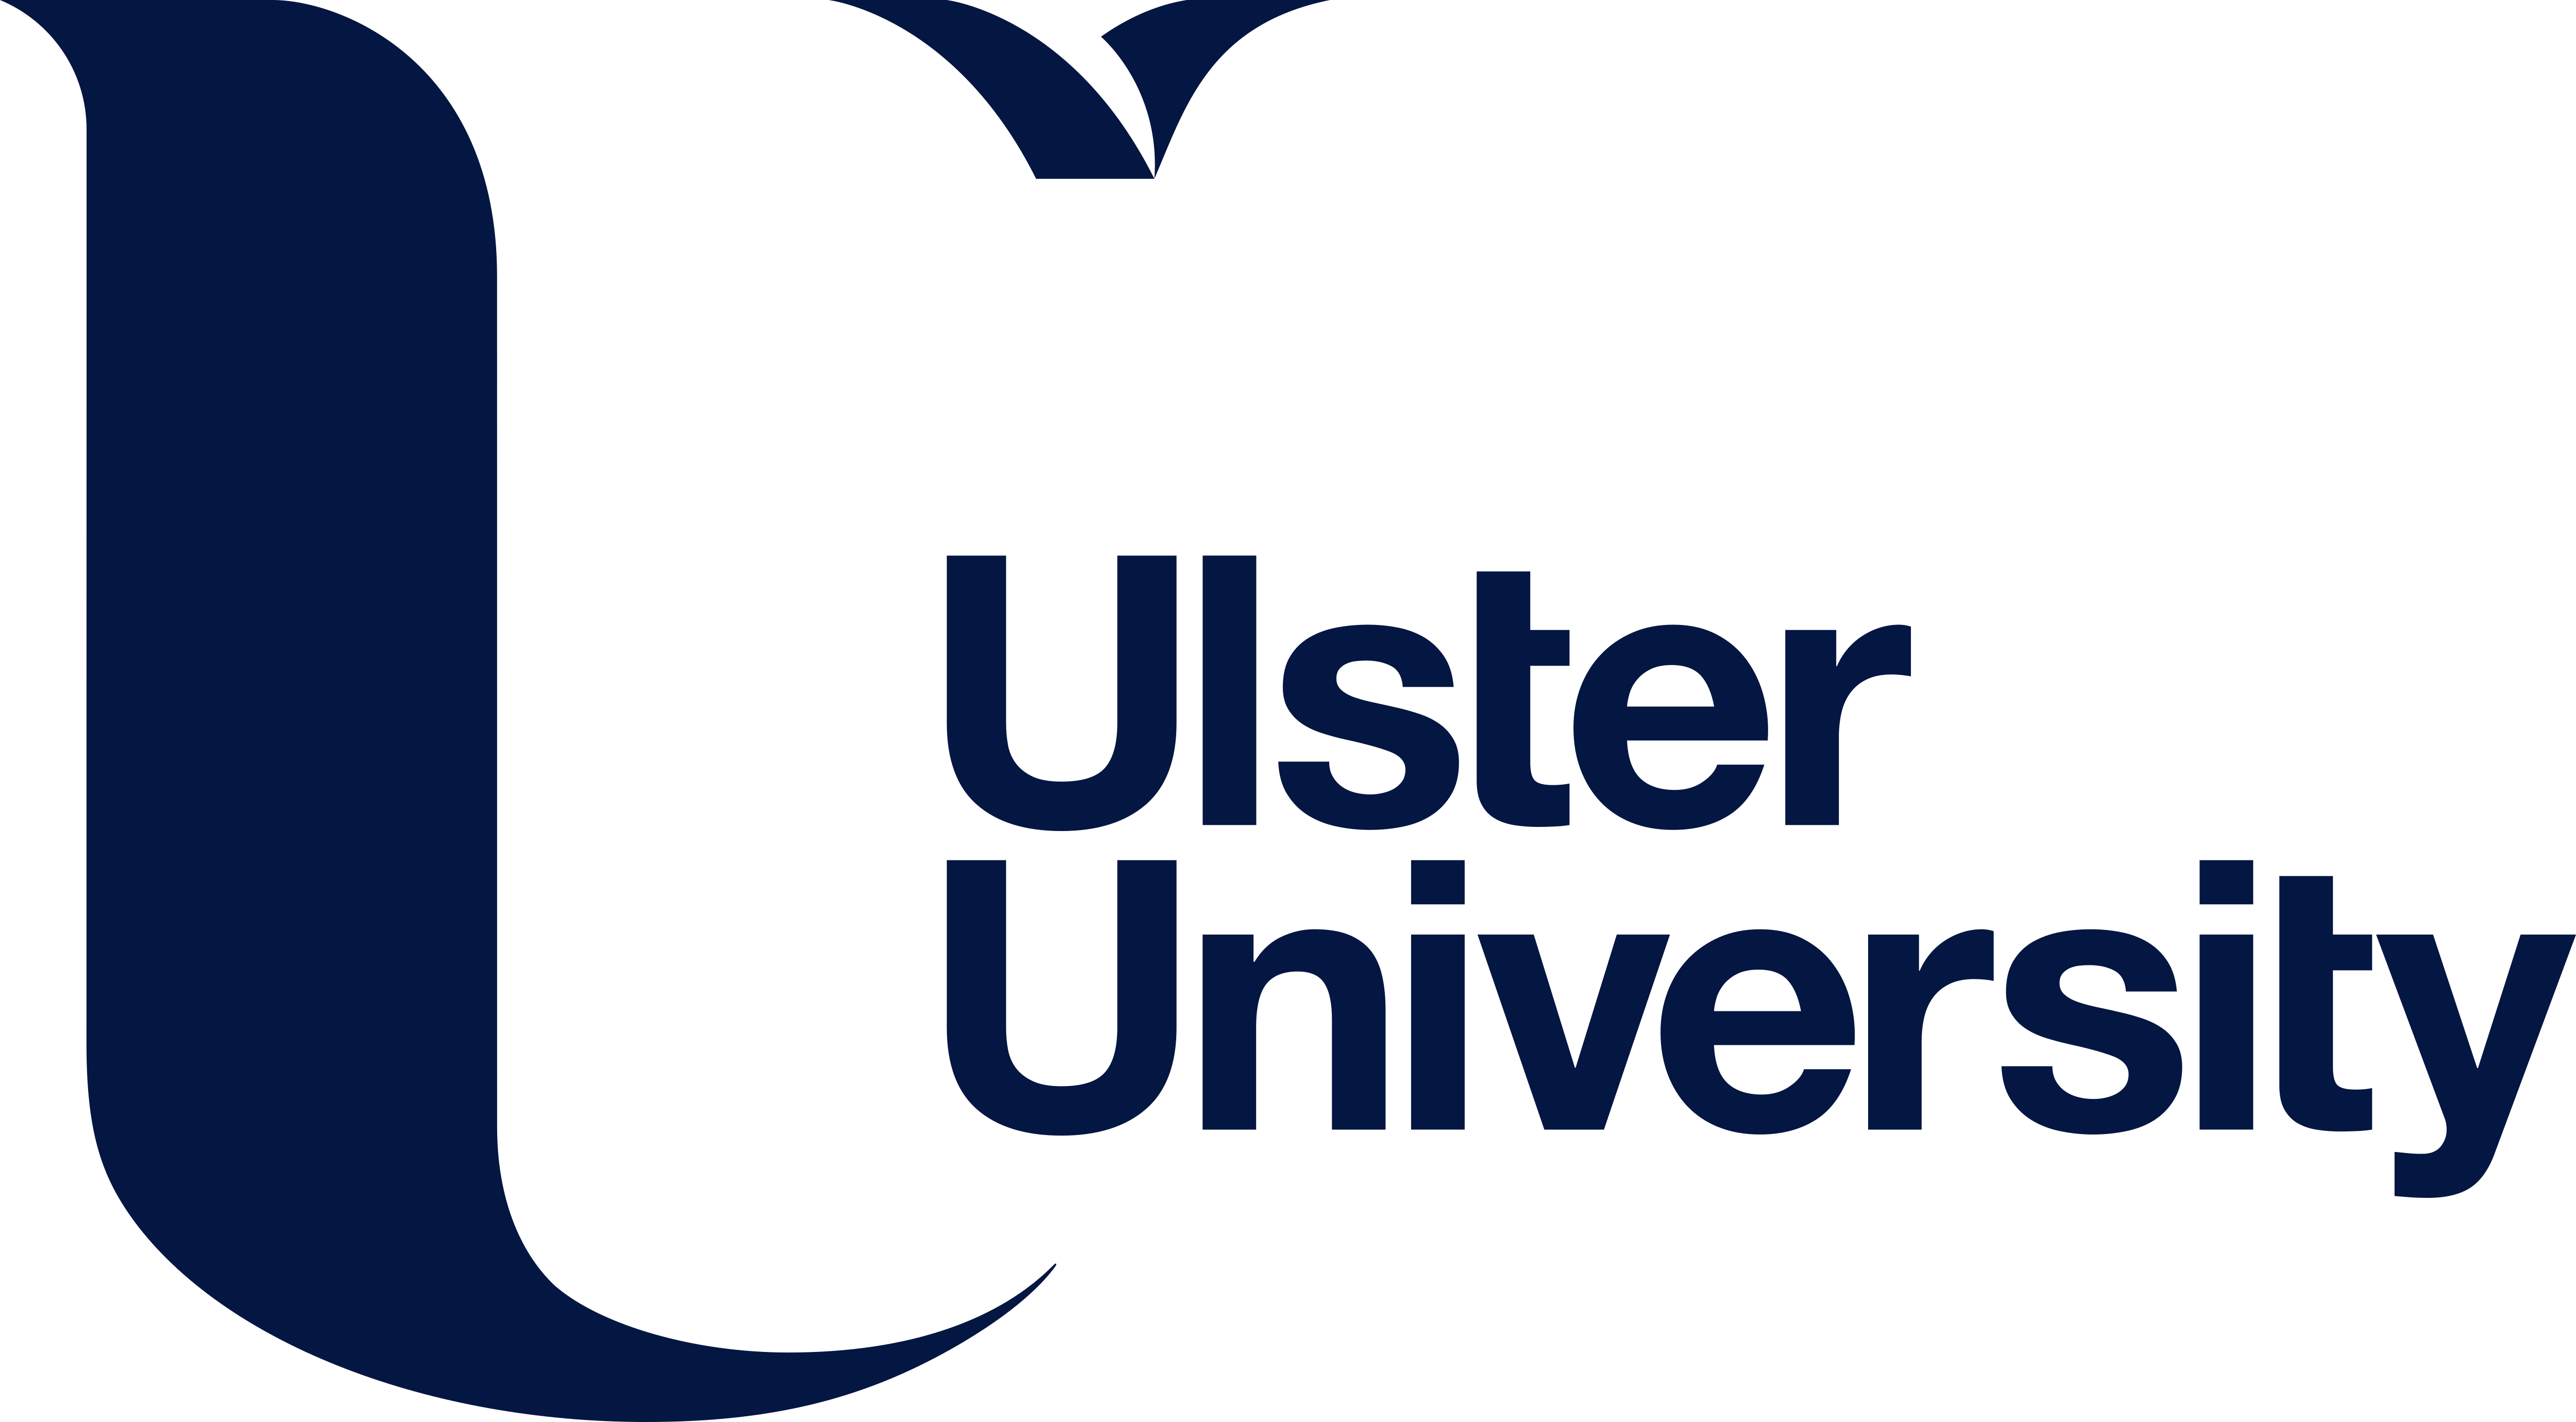 Image result for University of Ulster logo"